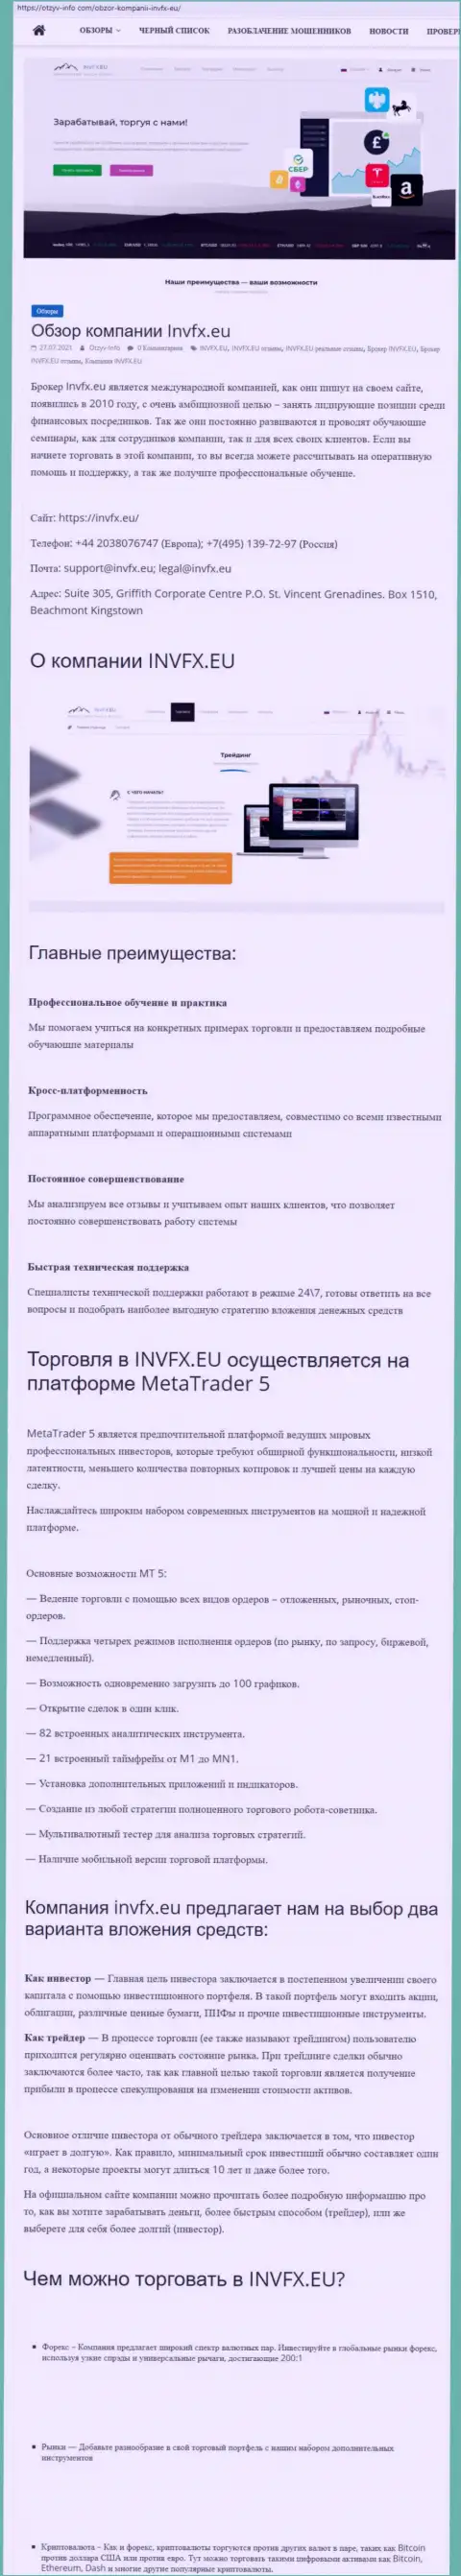 Сайт otzyv info com разместил публикацию о форекс-брокере ИНВФИкс